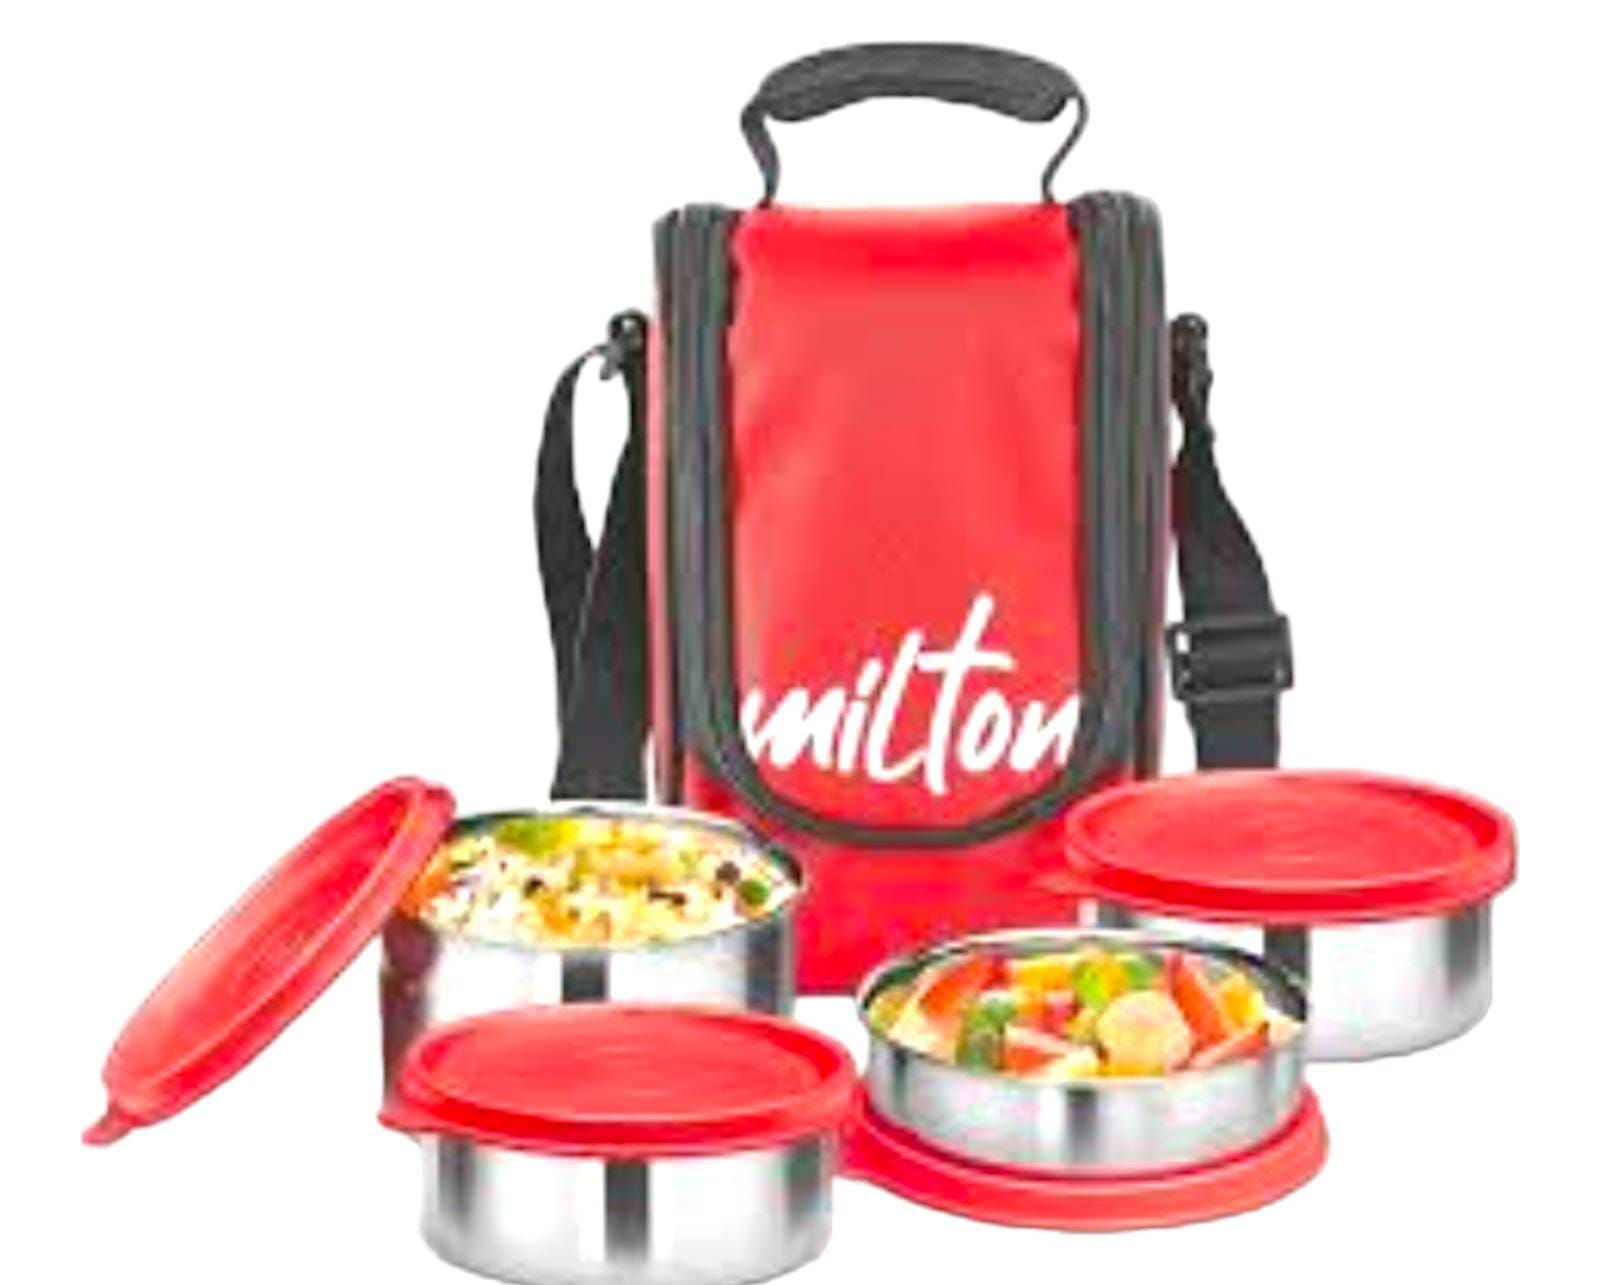 Milton Lunch Box